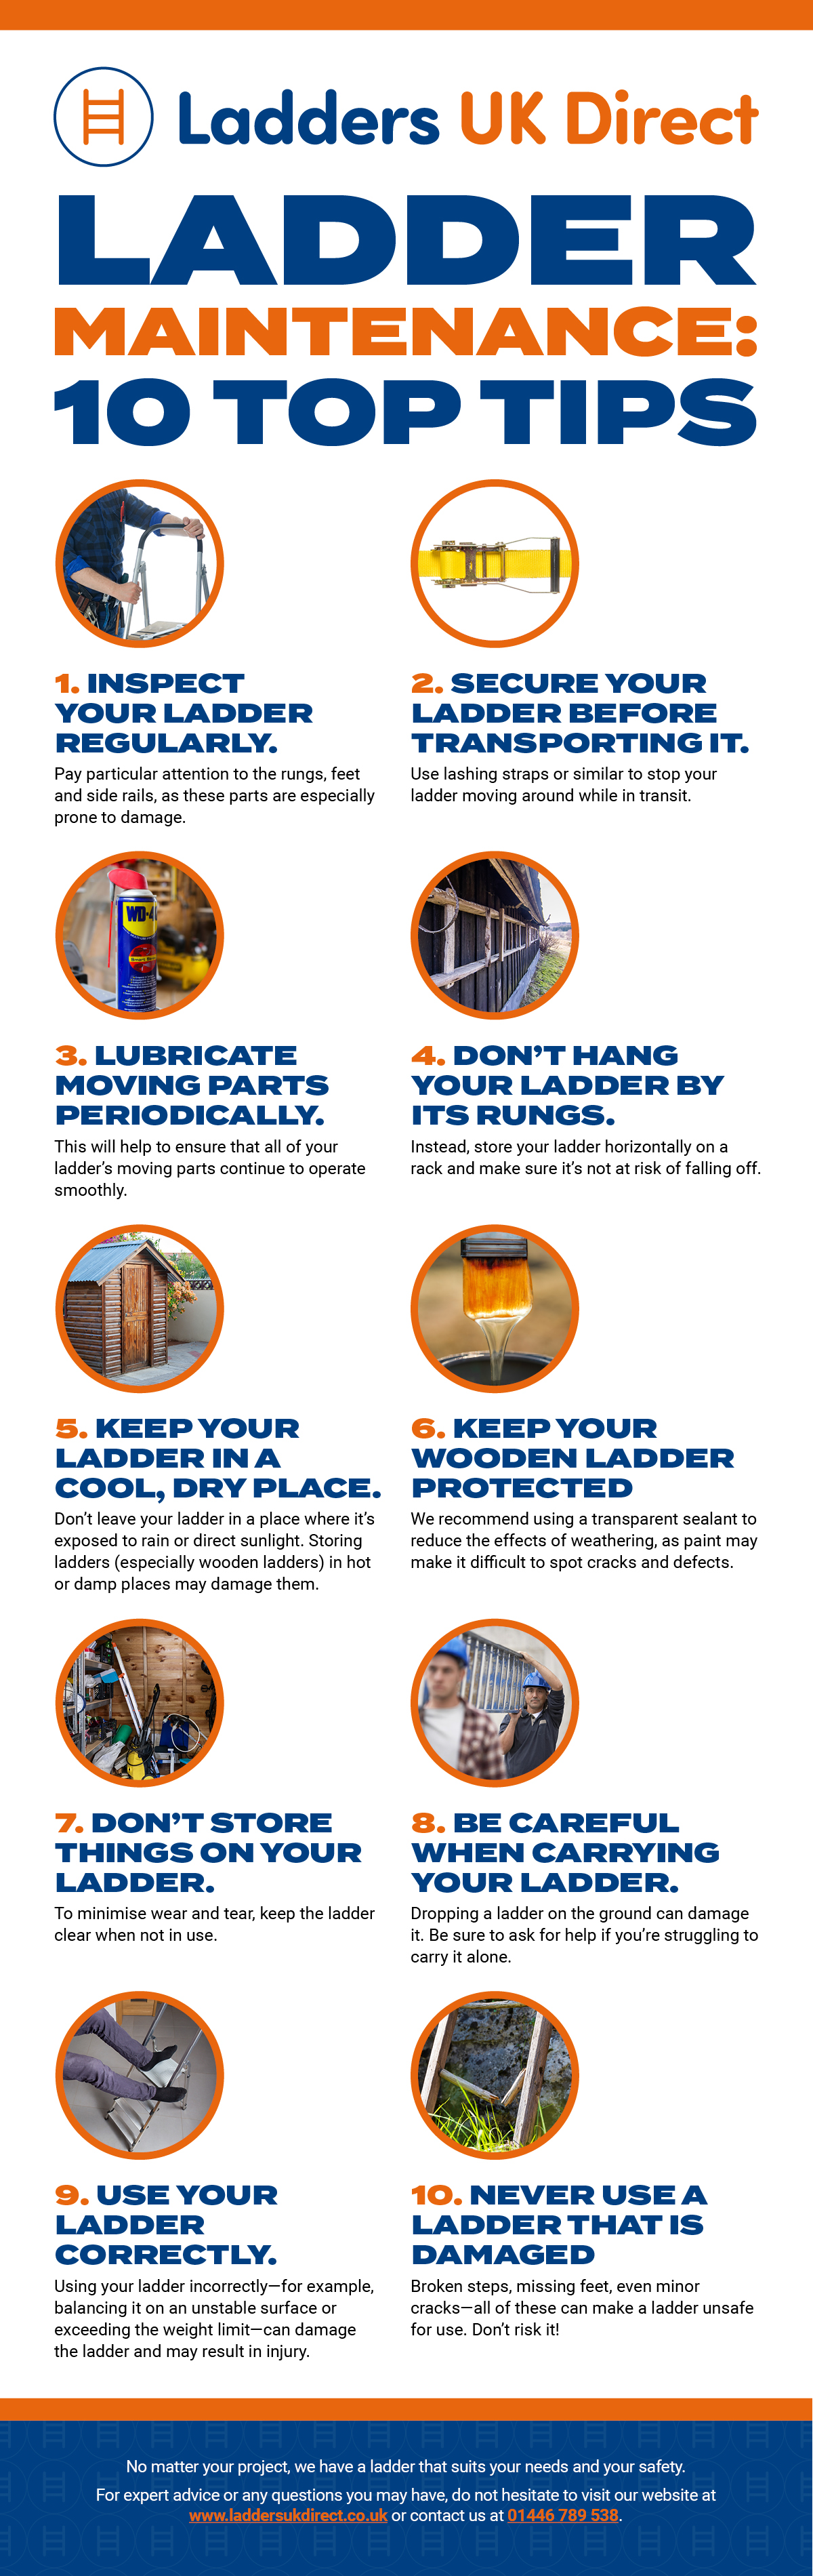 ladder maintenance ten top tips infographic